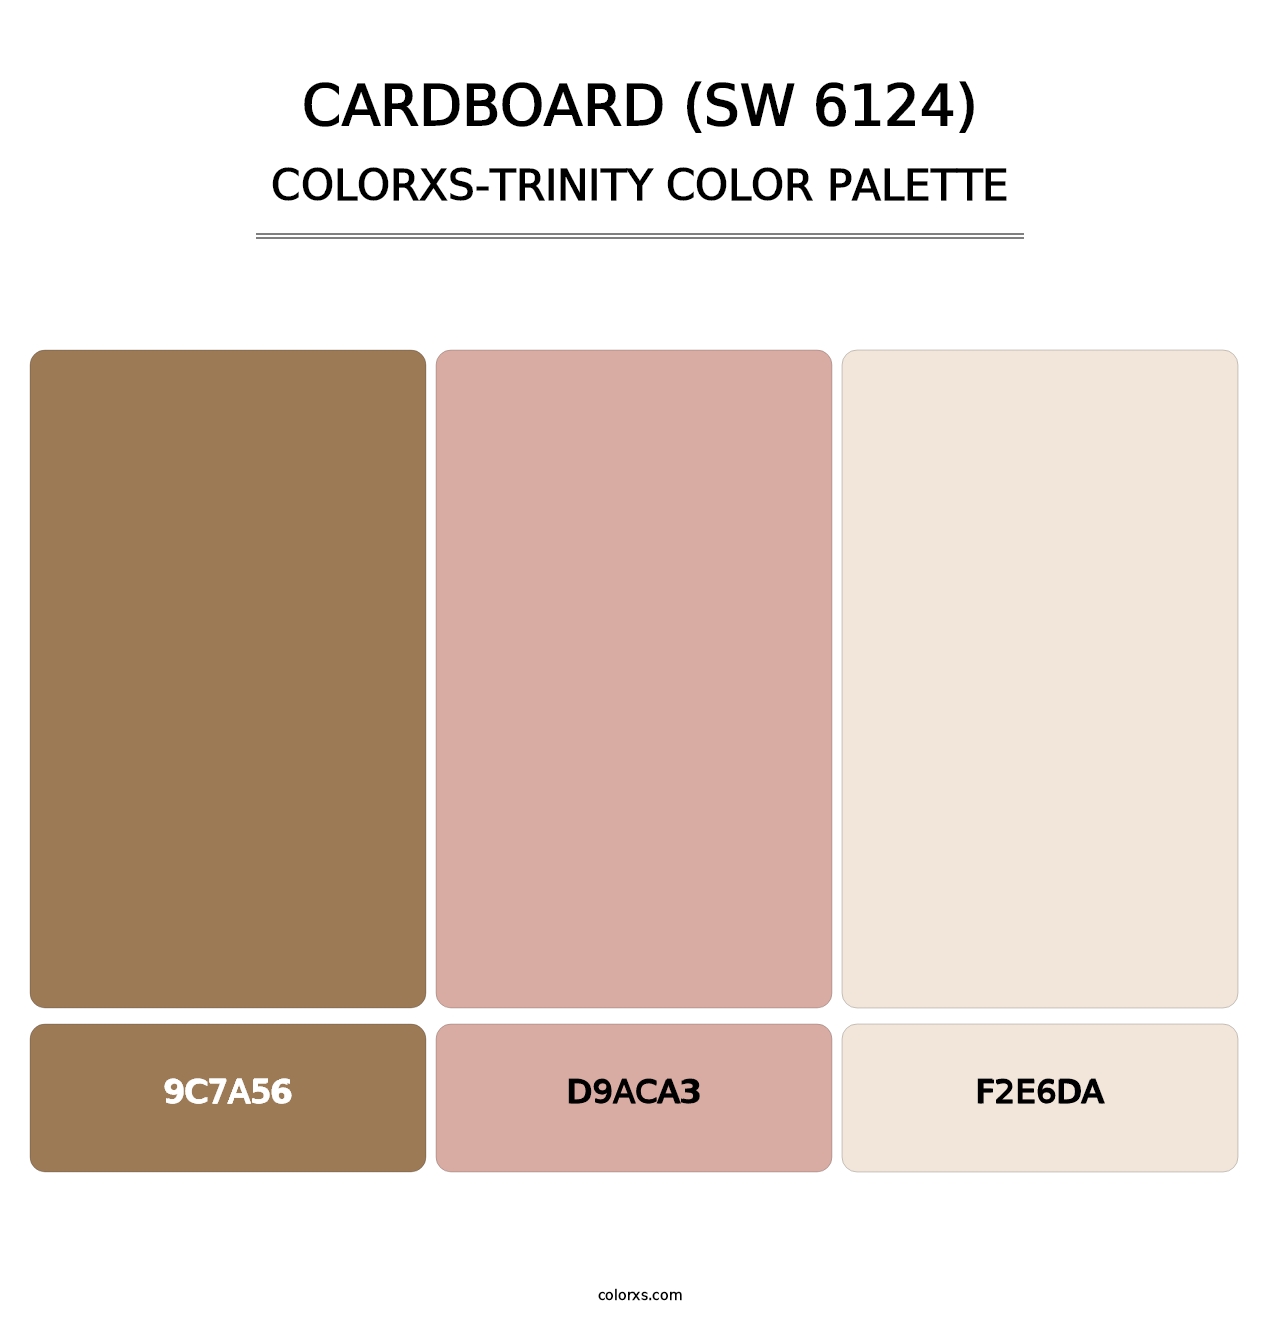 Cardboard (SW 6124) - Colorxs Trinity Palette